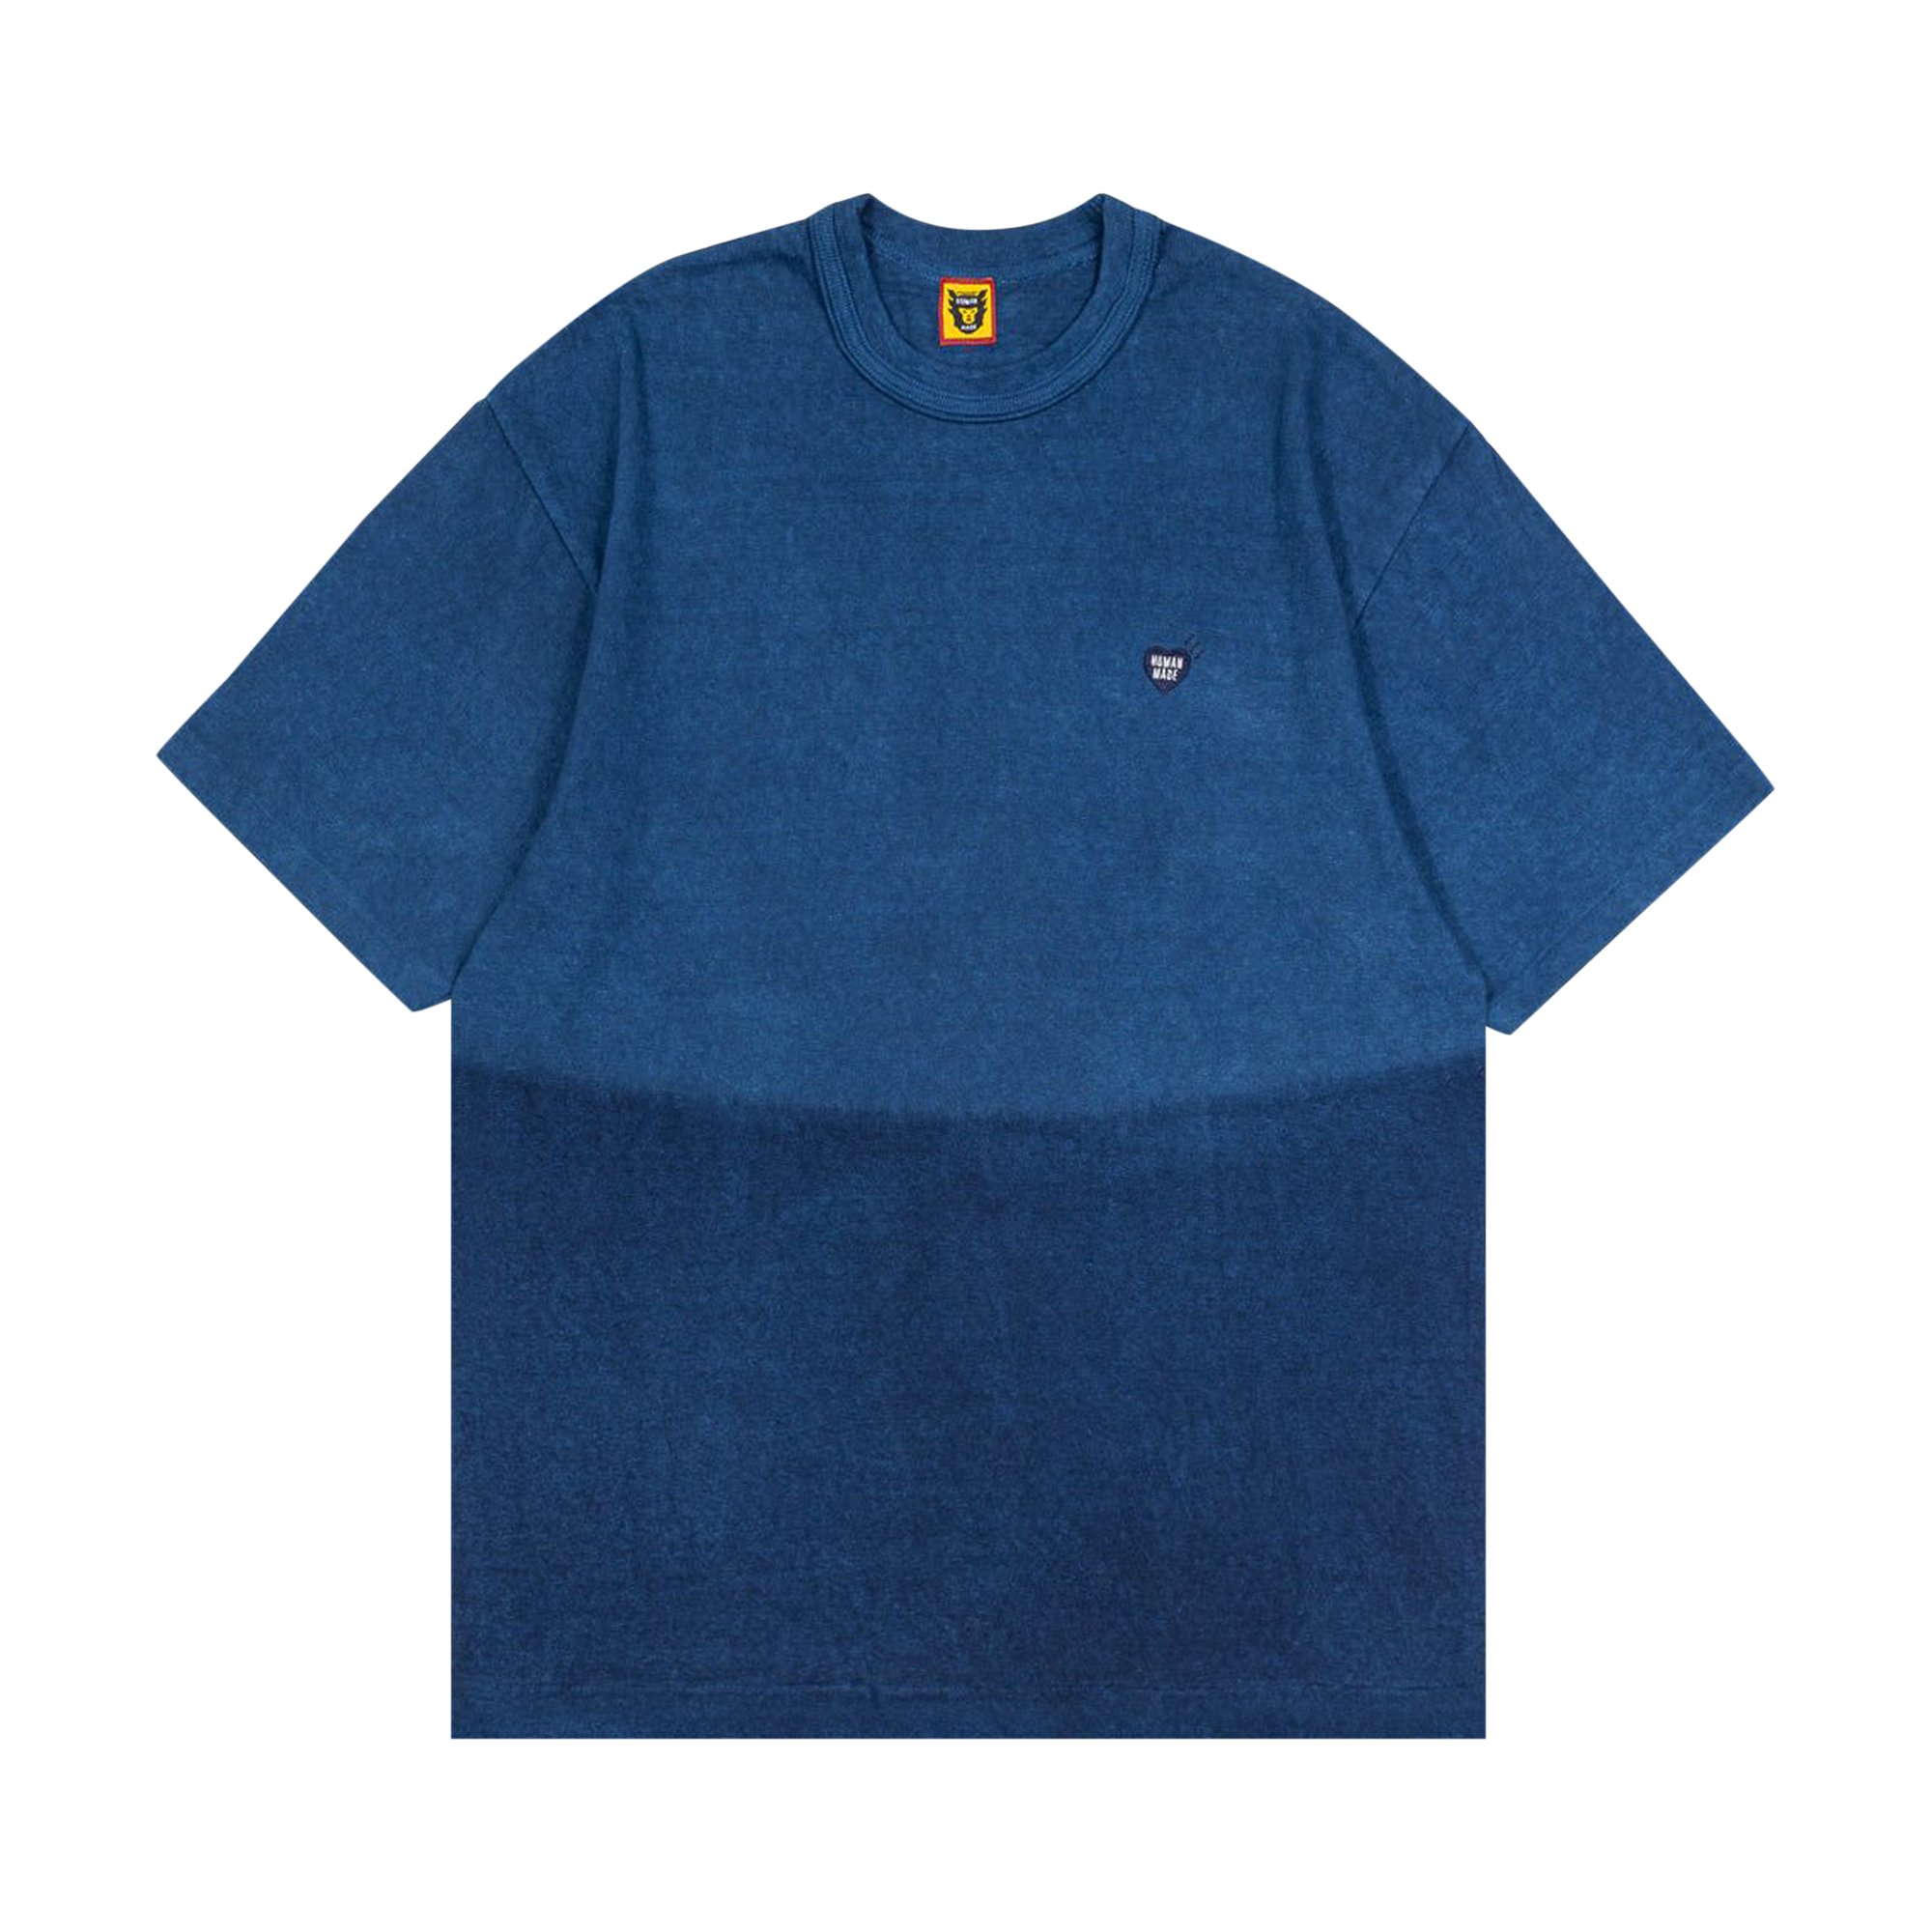 Buy Human Made Dyed T-Shirt #1 'Indigo' - HM25CS051 INDI | GOAT